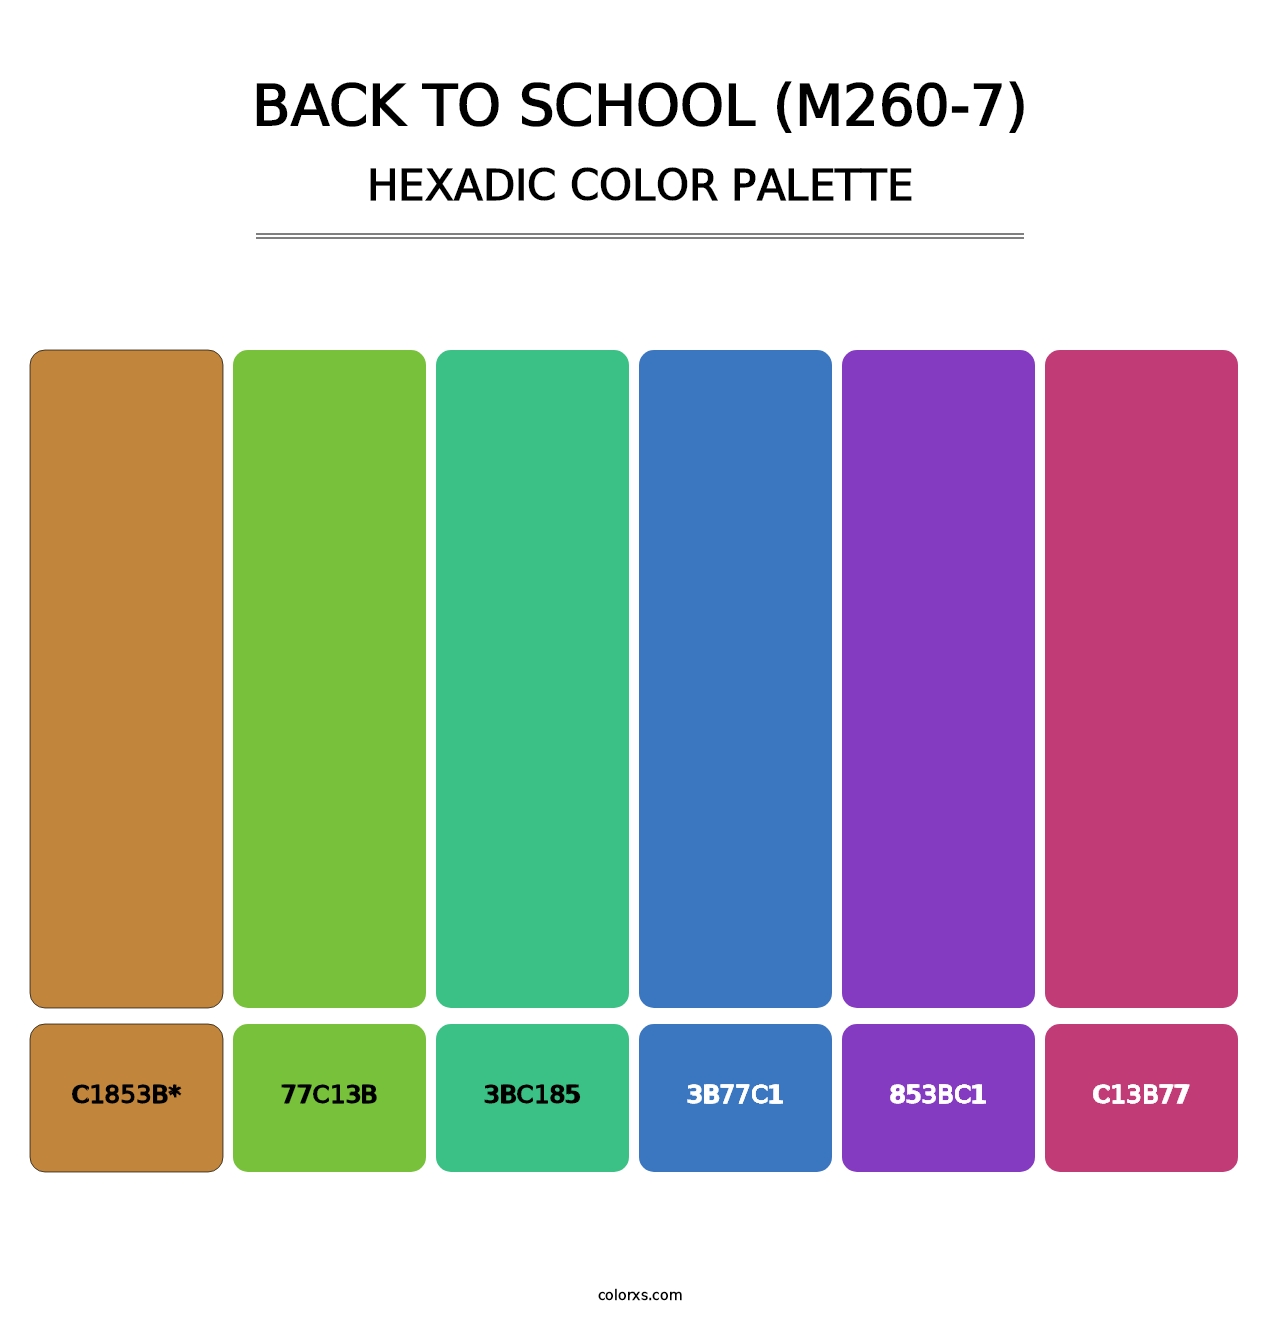 Back To School (M260-7) - Hexadic Color Palette